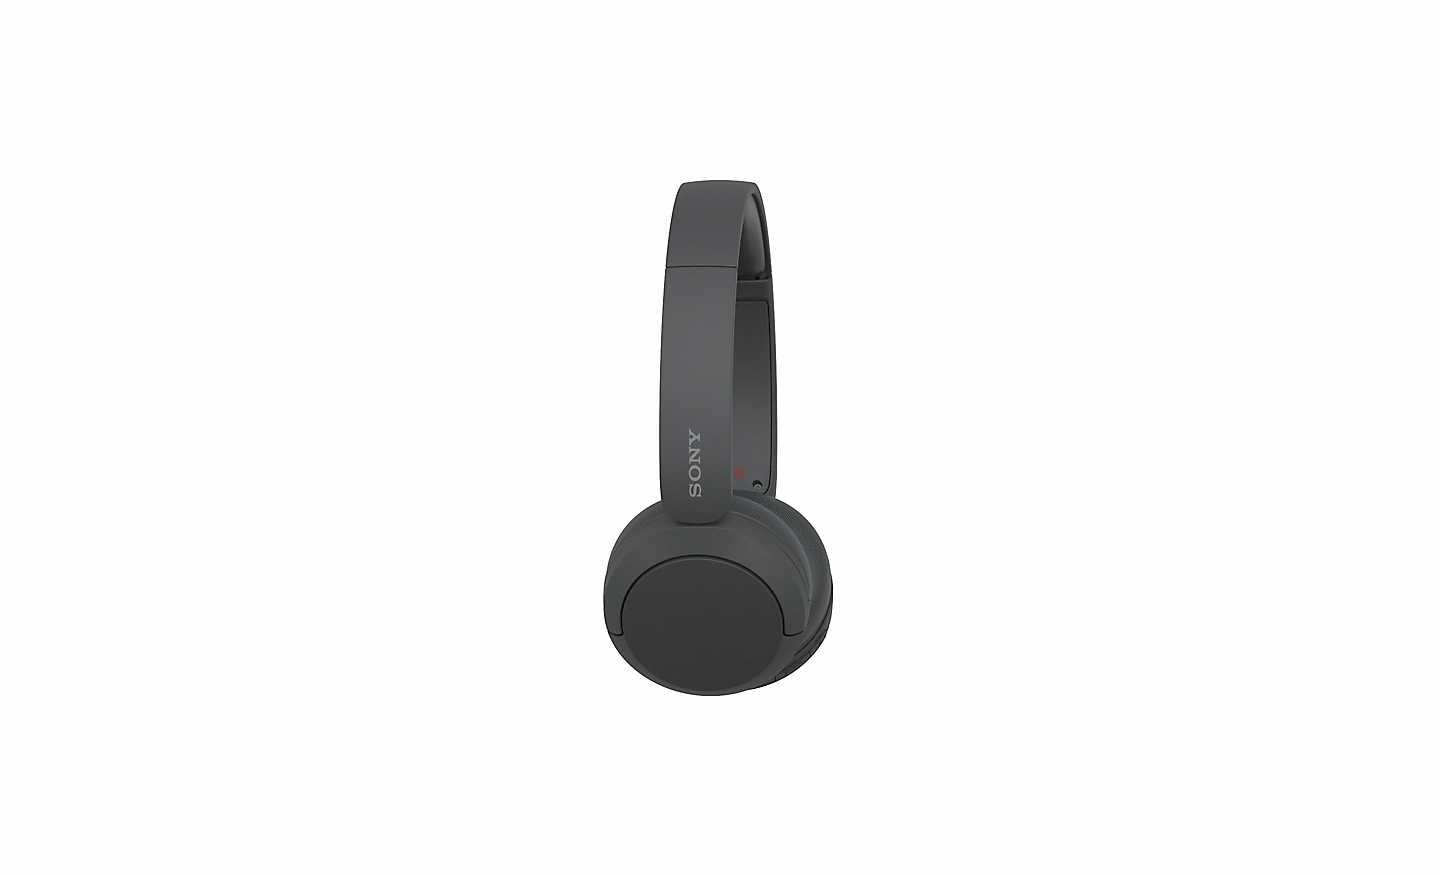 Slika crnih slušalica Sony WH-CH520 na bijeloj pozadini